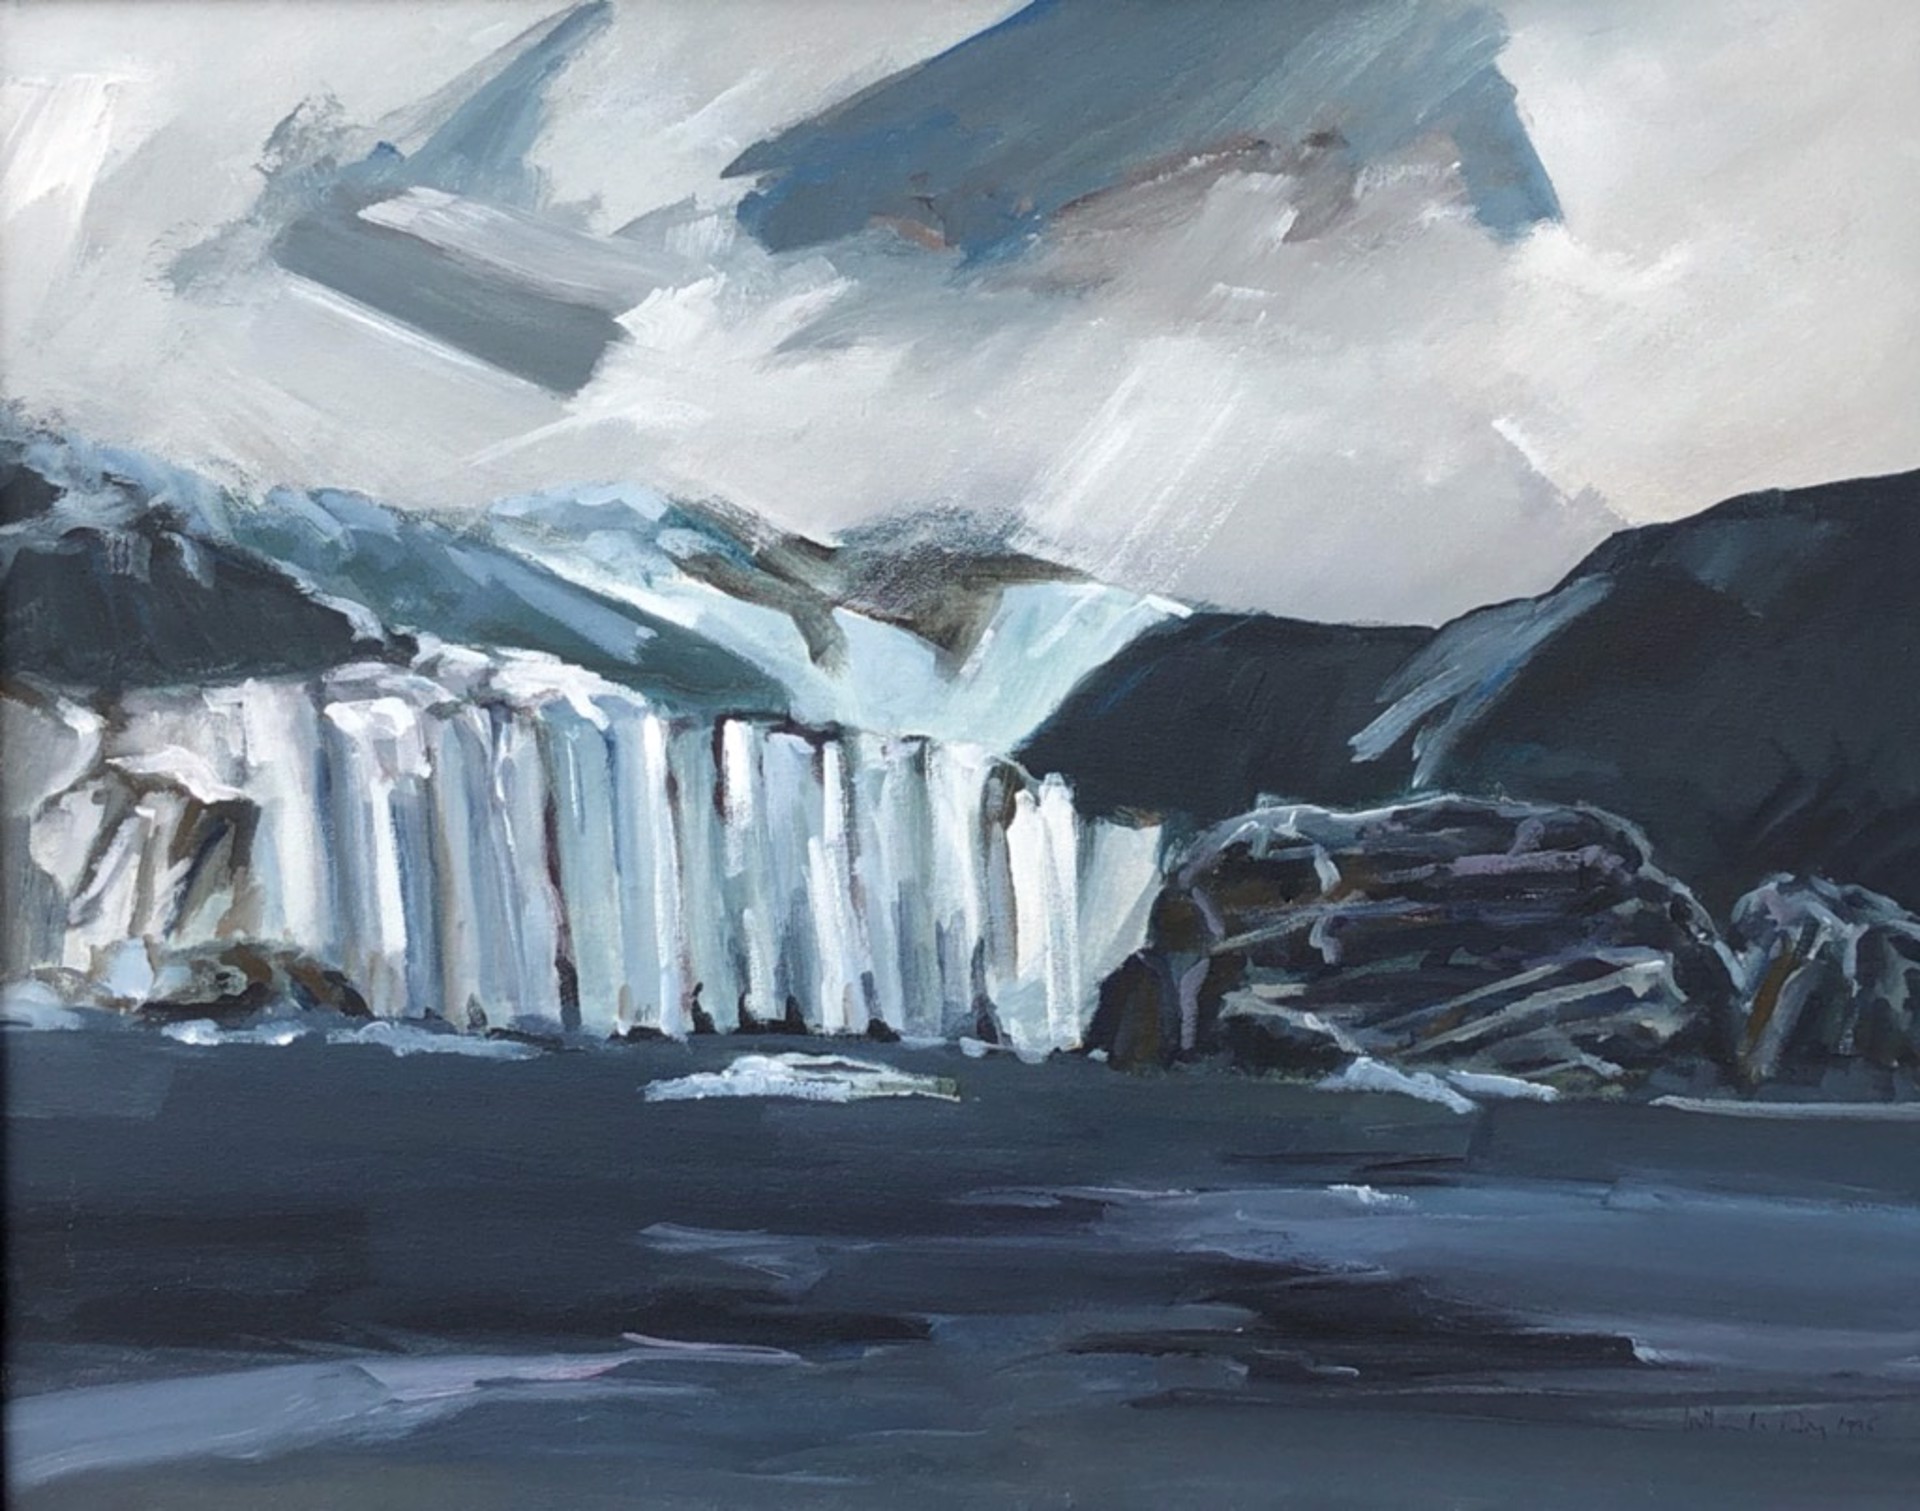 Glacier Edge by William Crosby - Alaskan Work